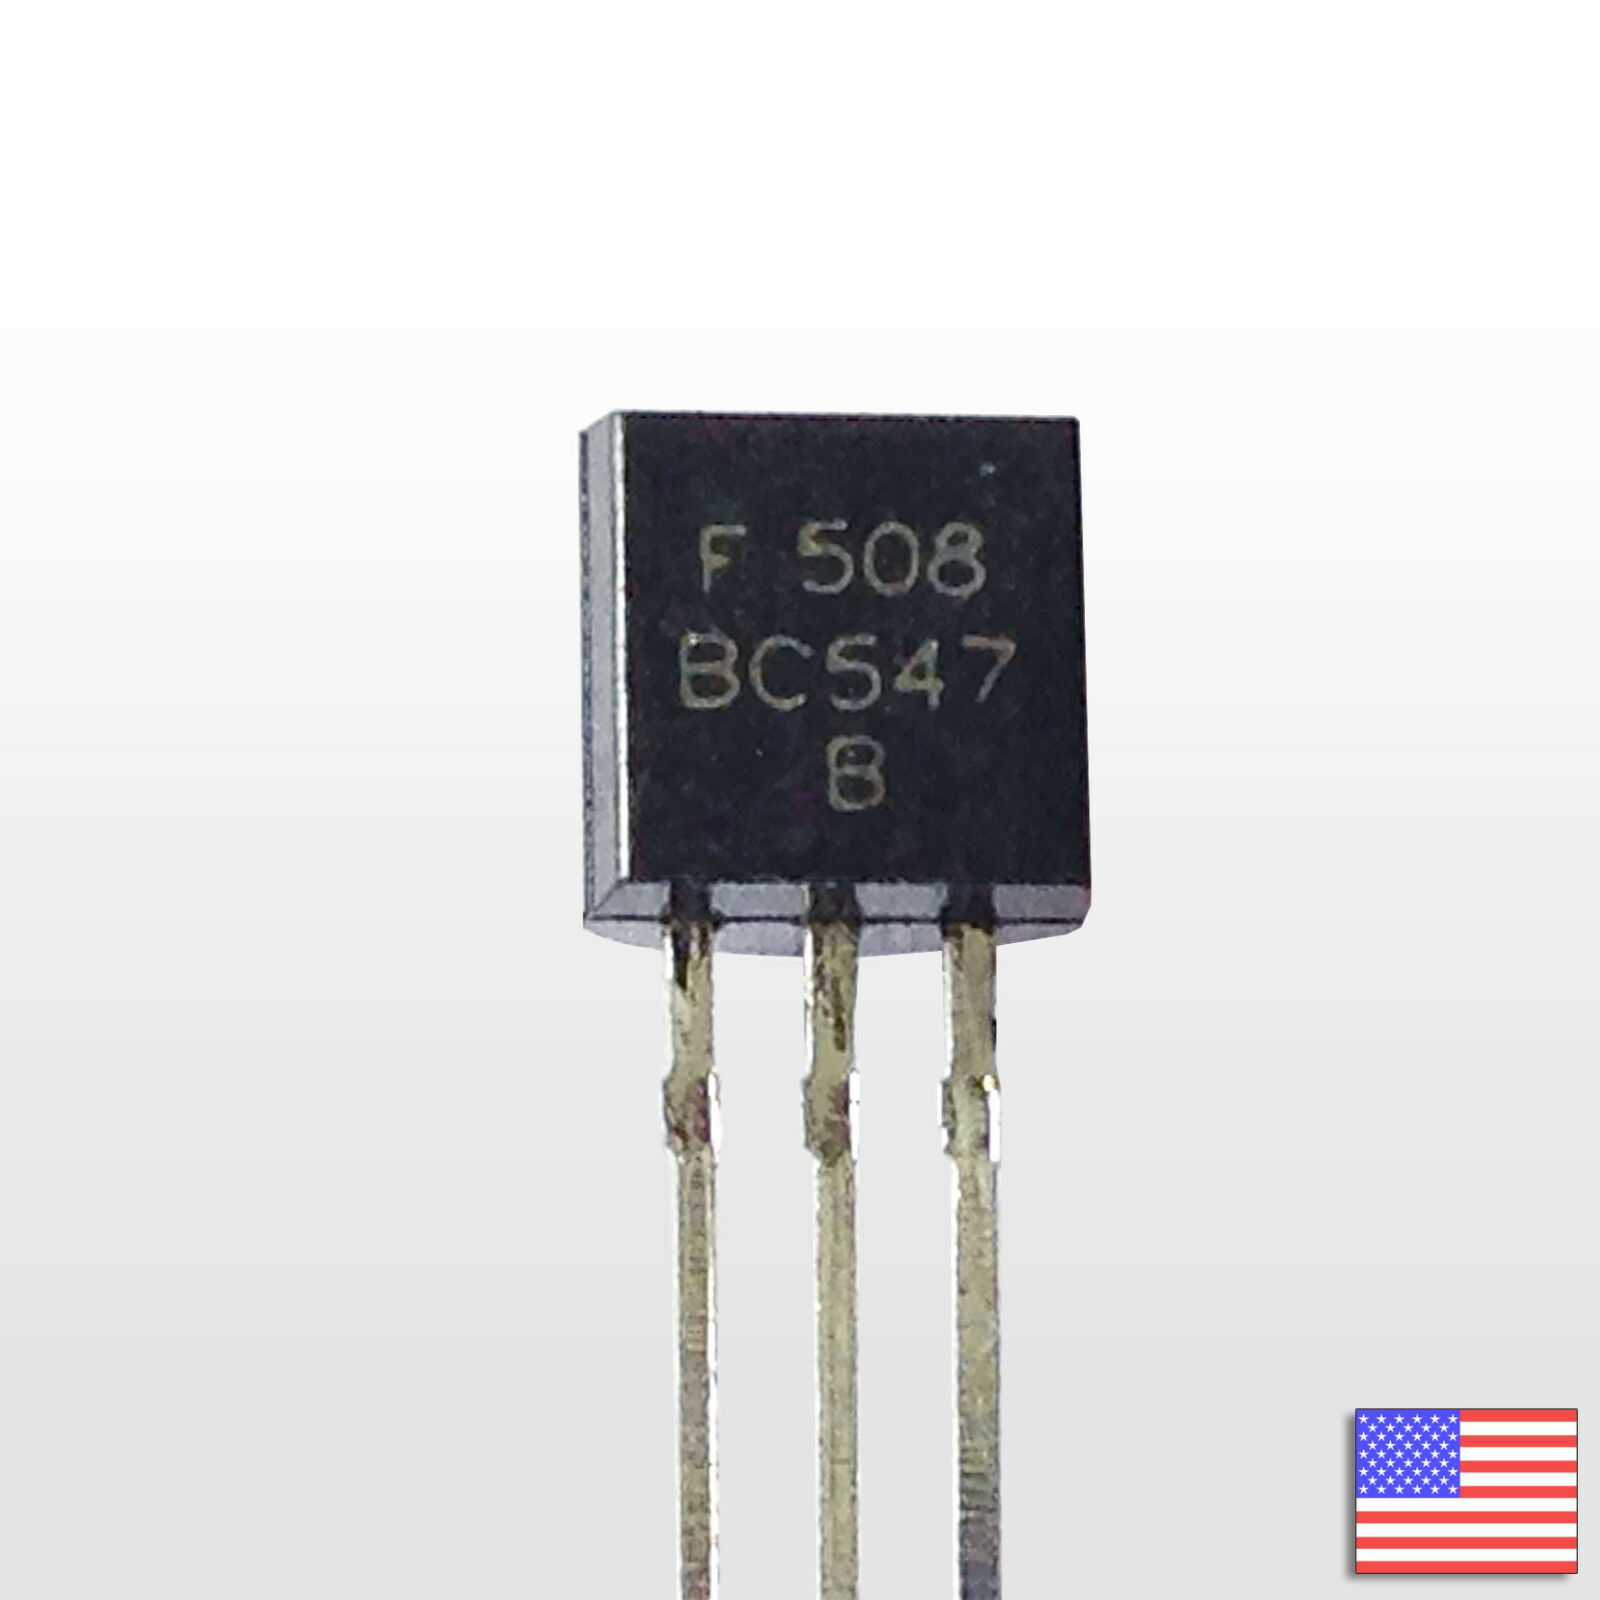 10x (10pcs) Bc547b Npn Bipolar Amplifier Transistor Bjt Bc547 - Free Shipping